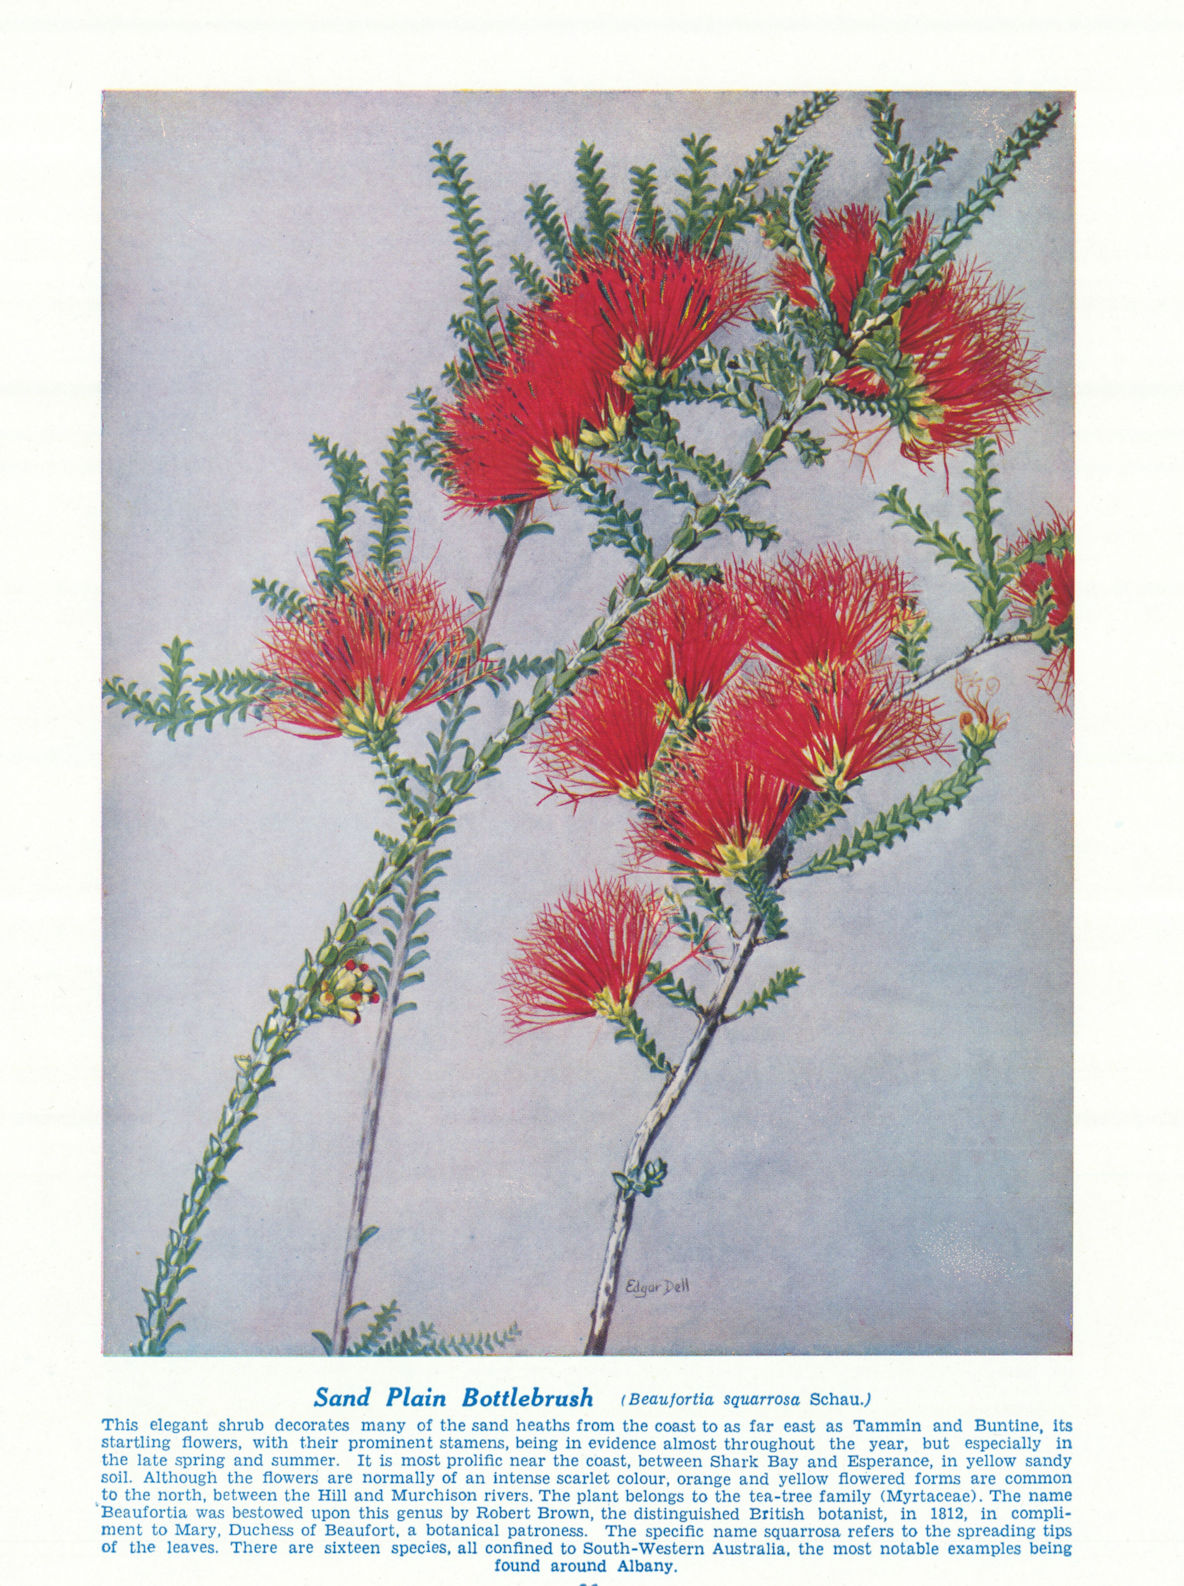 Associate Product Sand Plain Bottlebrush (Beaufortia squarrosa). West Australian Wild Flowers 1950